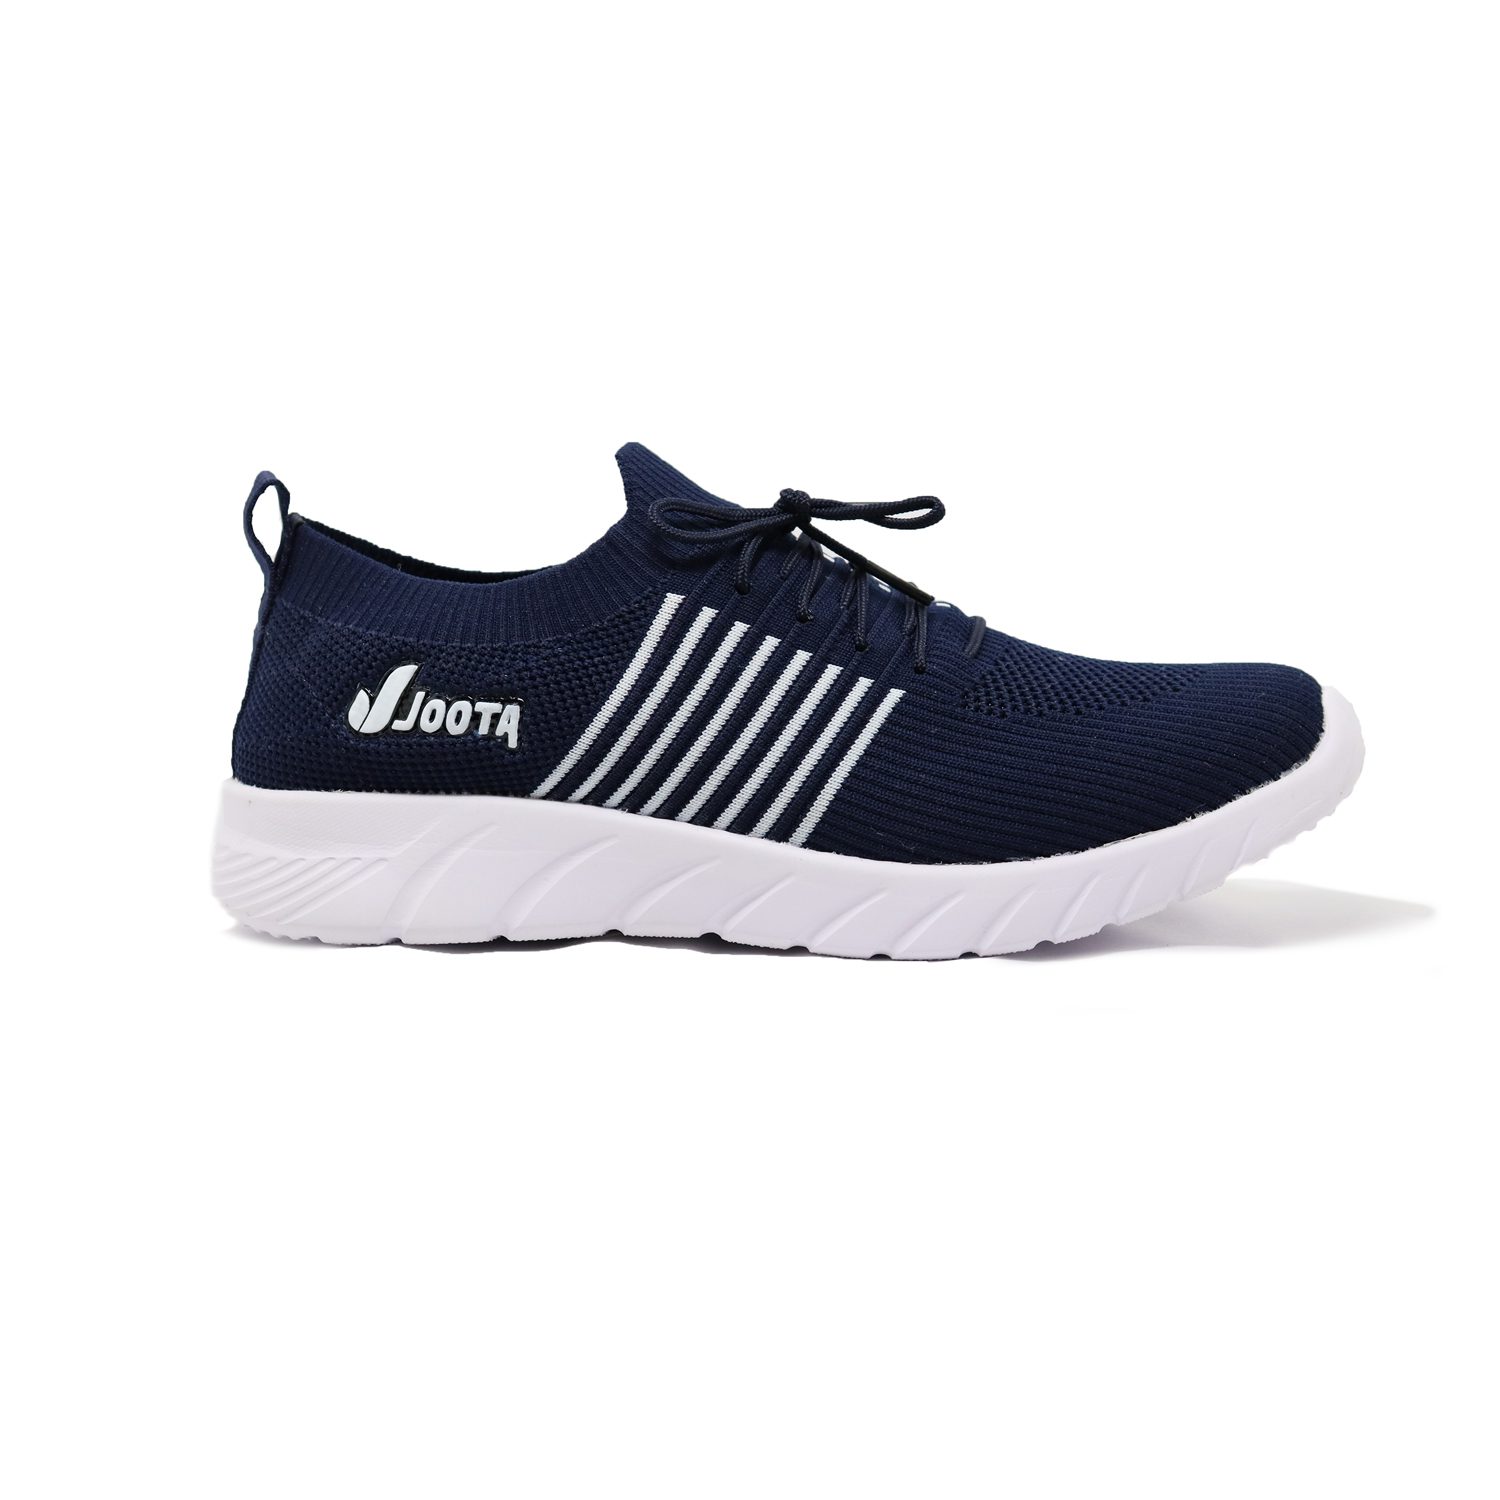 Joota Sport Running Shoes For Men SS-108 NBlue & White - Joota